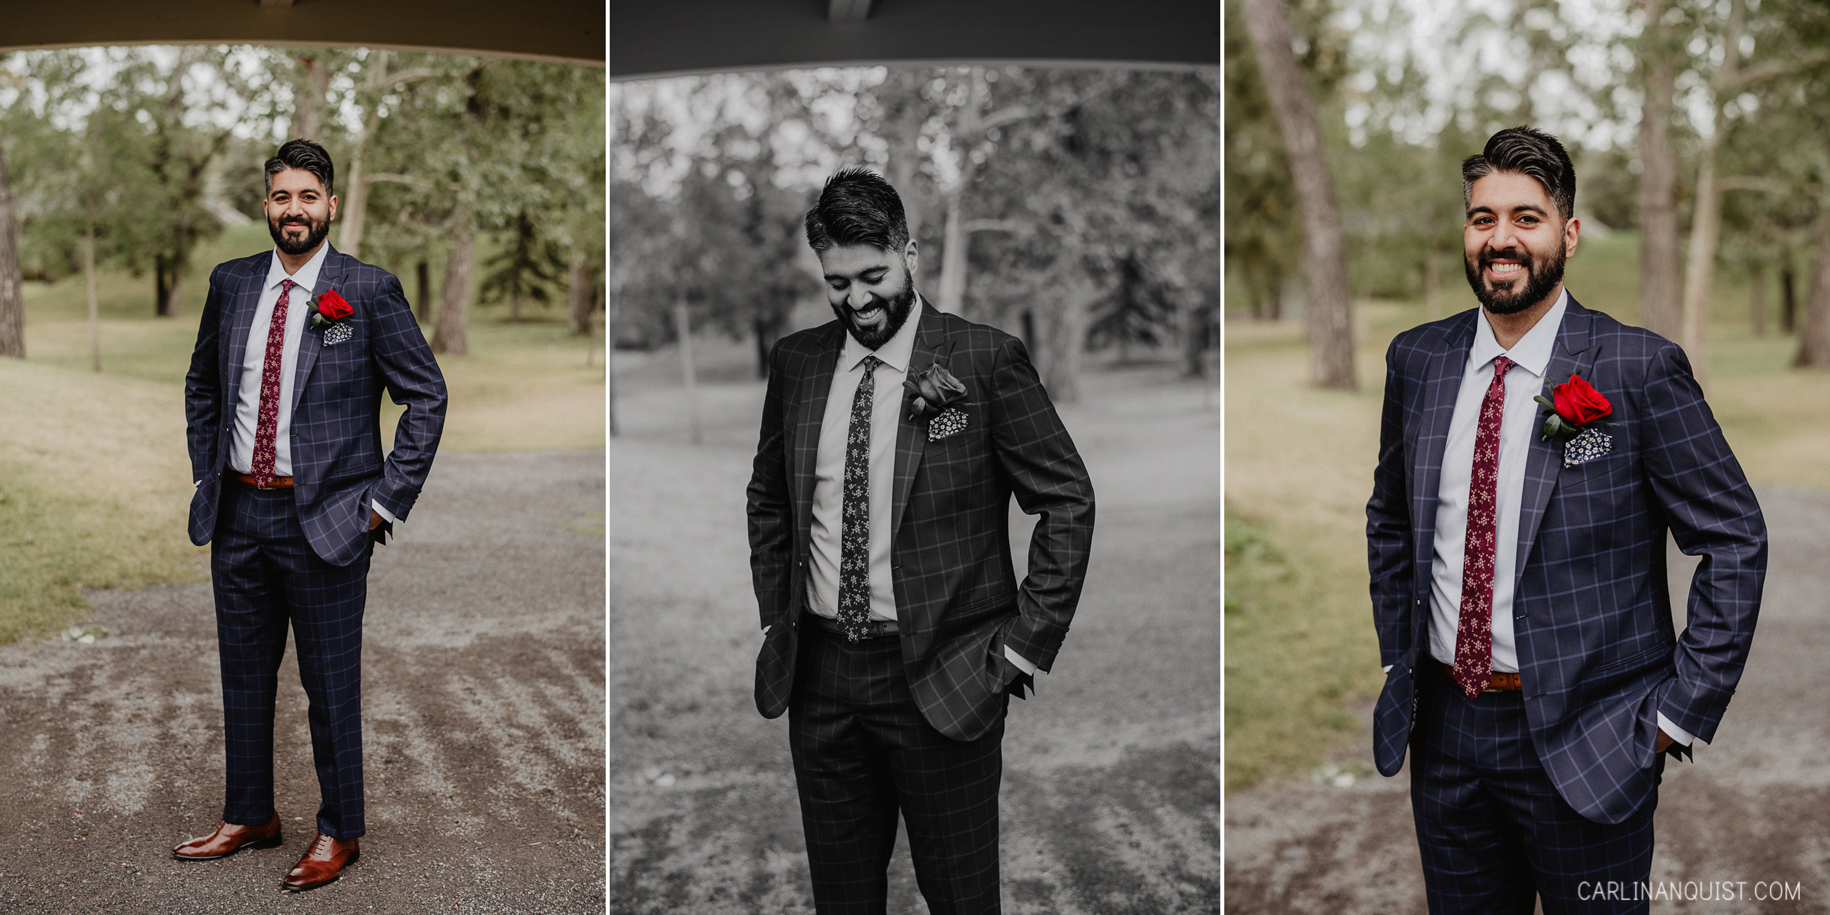 Groom Portraits - Bride & Groom Portraits - Catholic/Sikh Wedding Photographer Calgary